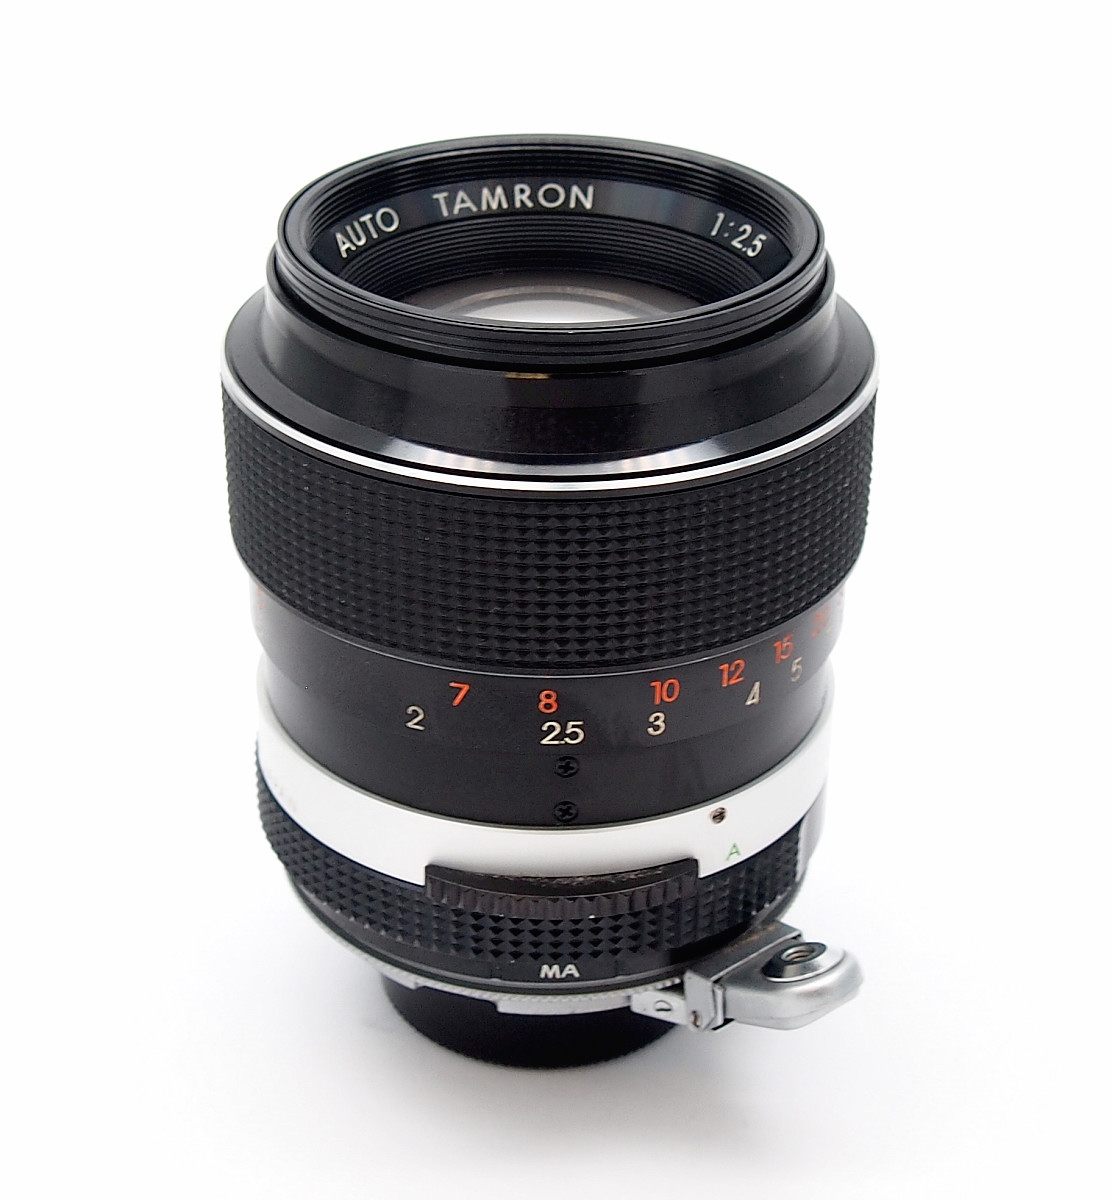 Tamron 105mm F2.5 Portrait Lens with Exakta Mount #8669